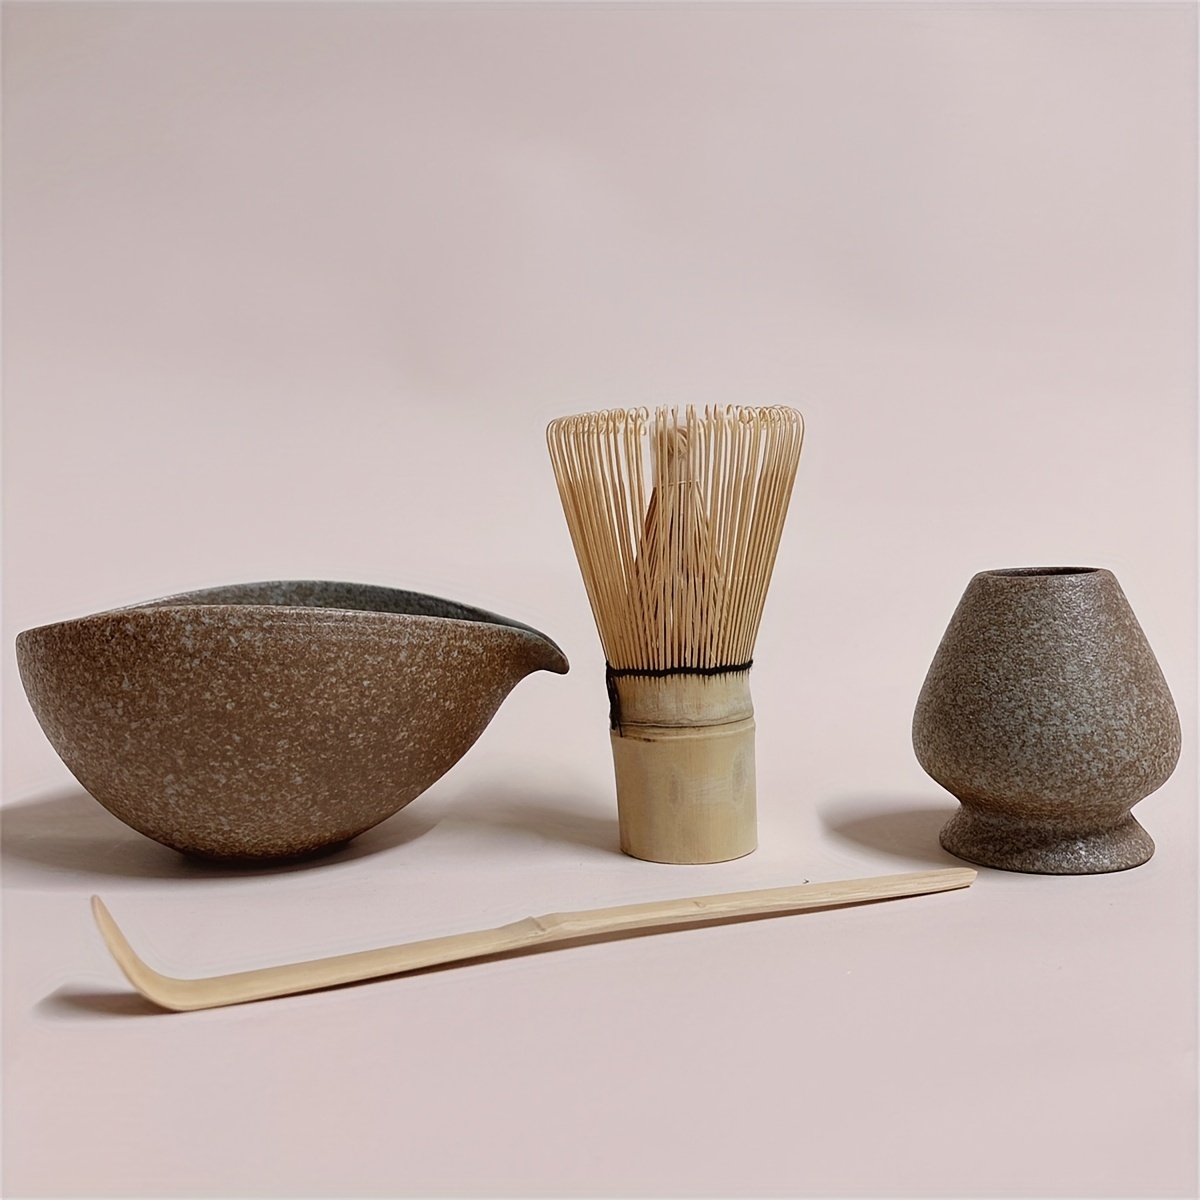 Accesorios para juegos de té japonés, Matcha batidor de té verde, cepillo  de bambú, herramienta de cocina, 1 unidad - AliExpress